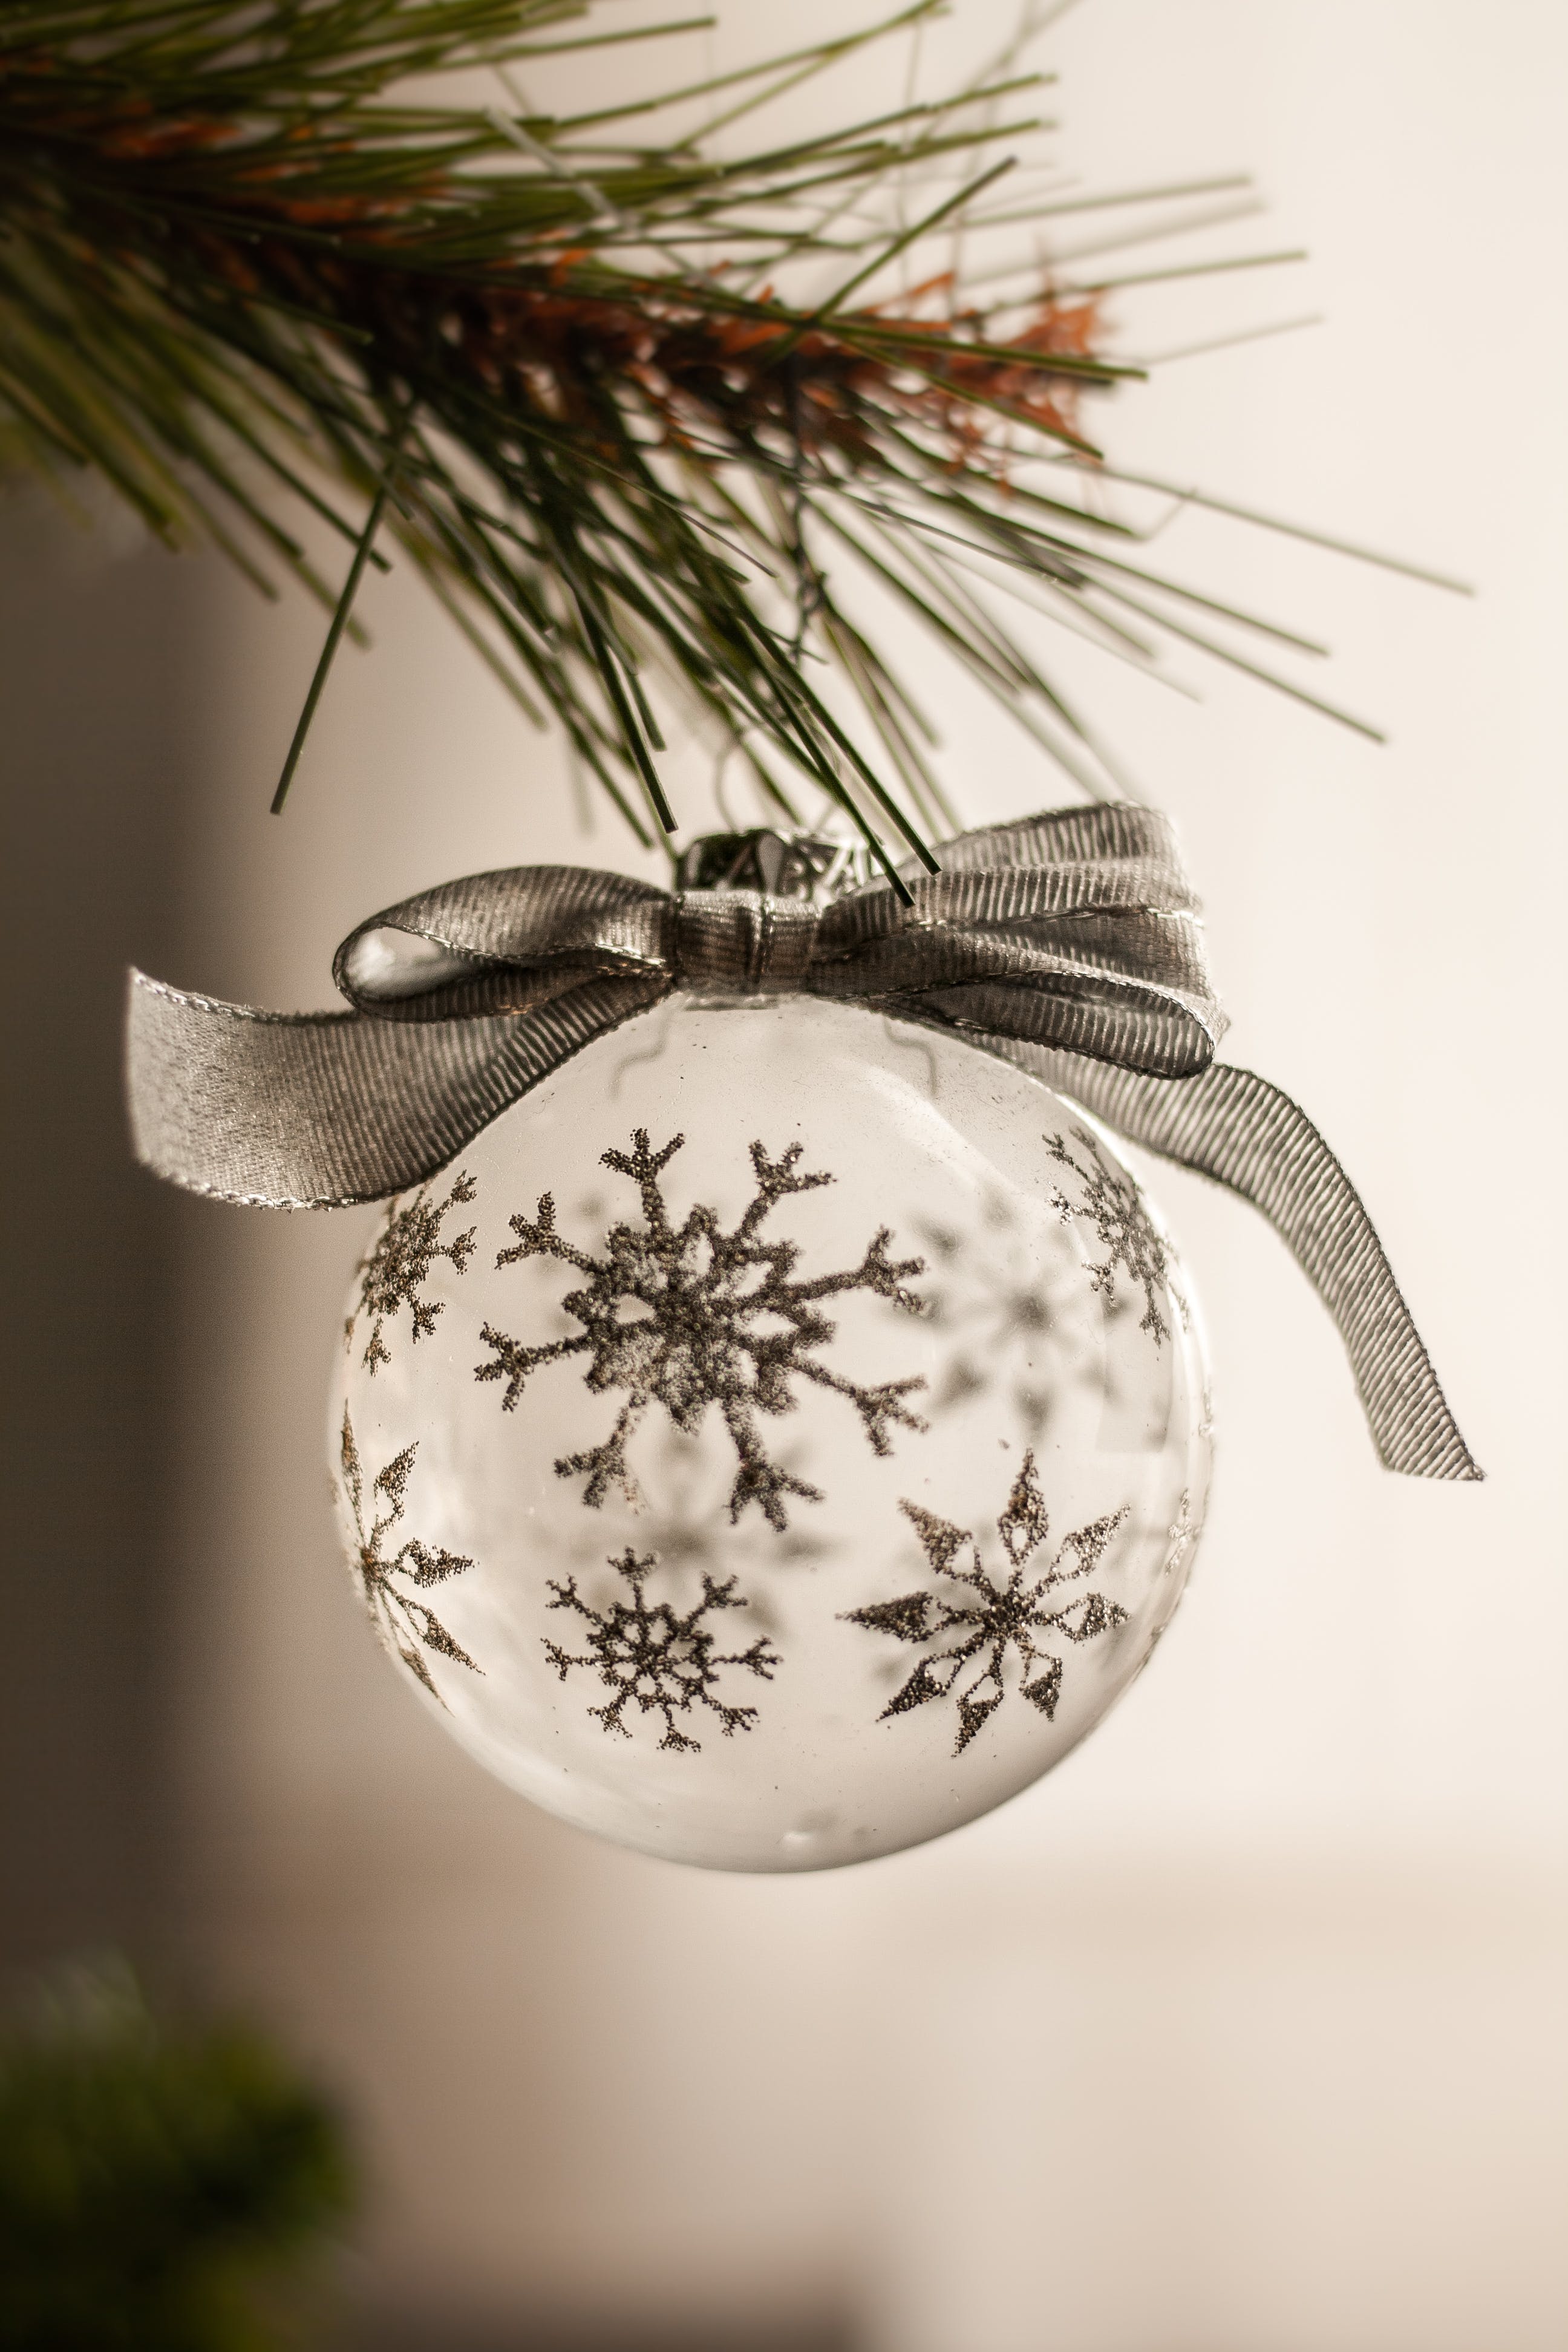 White ball with snowflake print on the Christmas tree